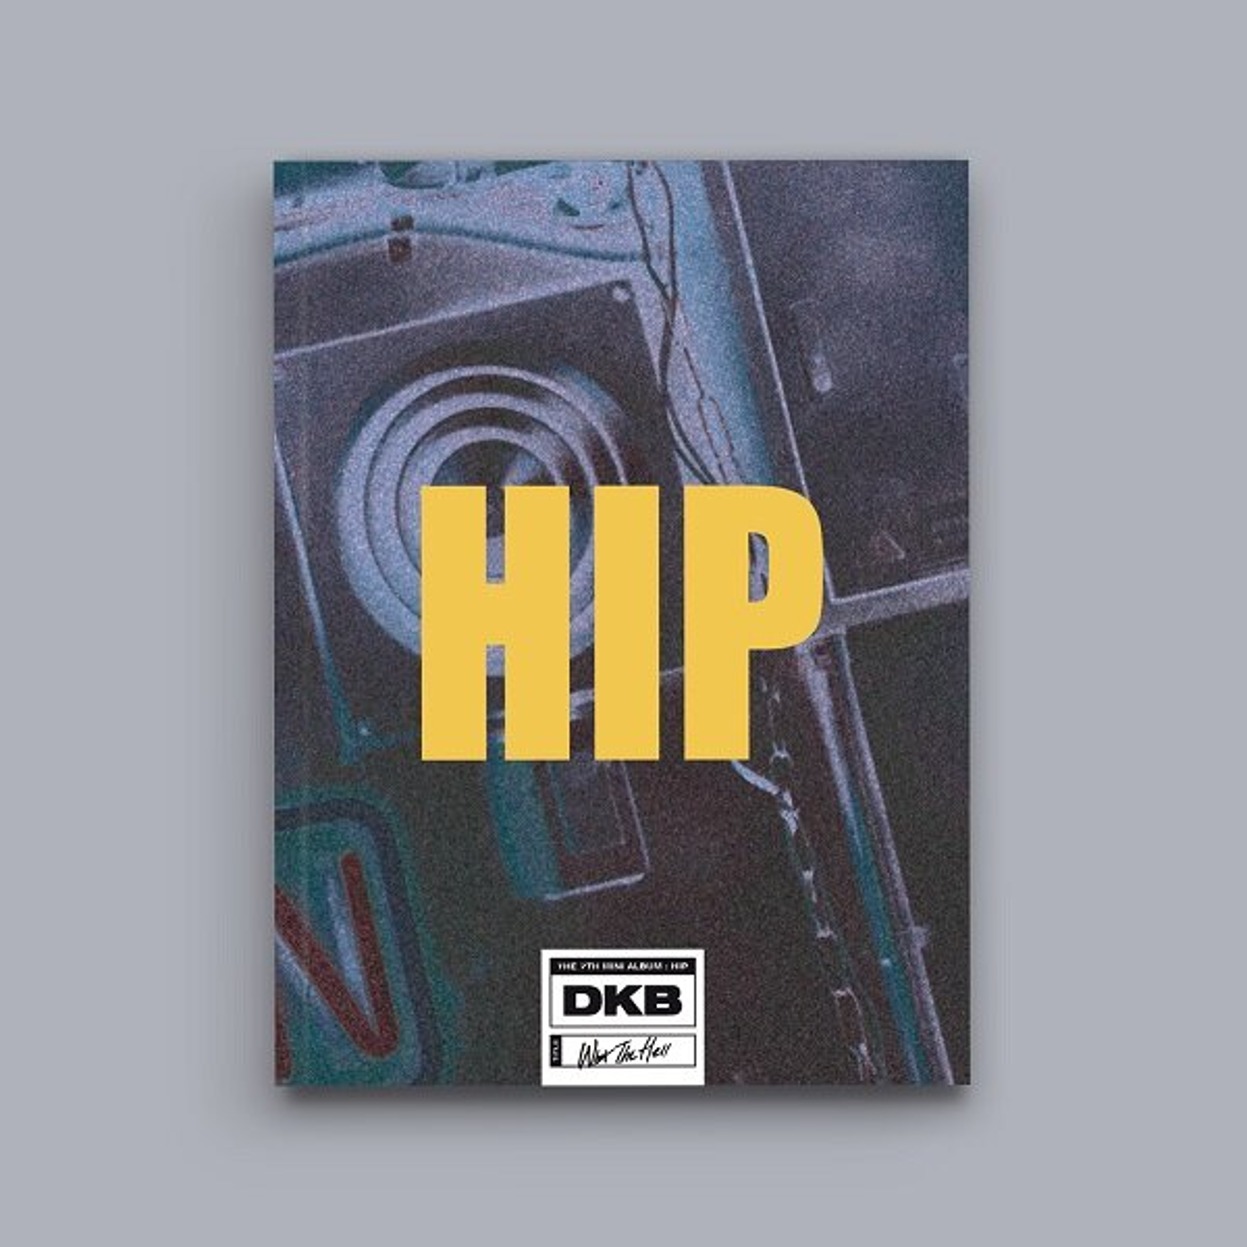 DKB (DKB) - 7th mini album HIP (HIGH VER.)